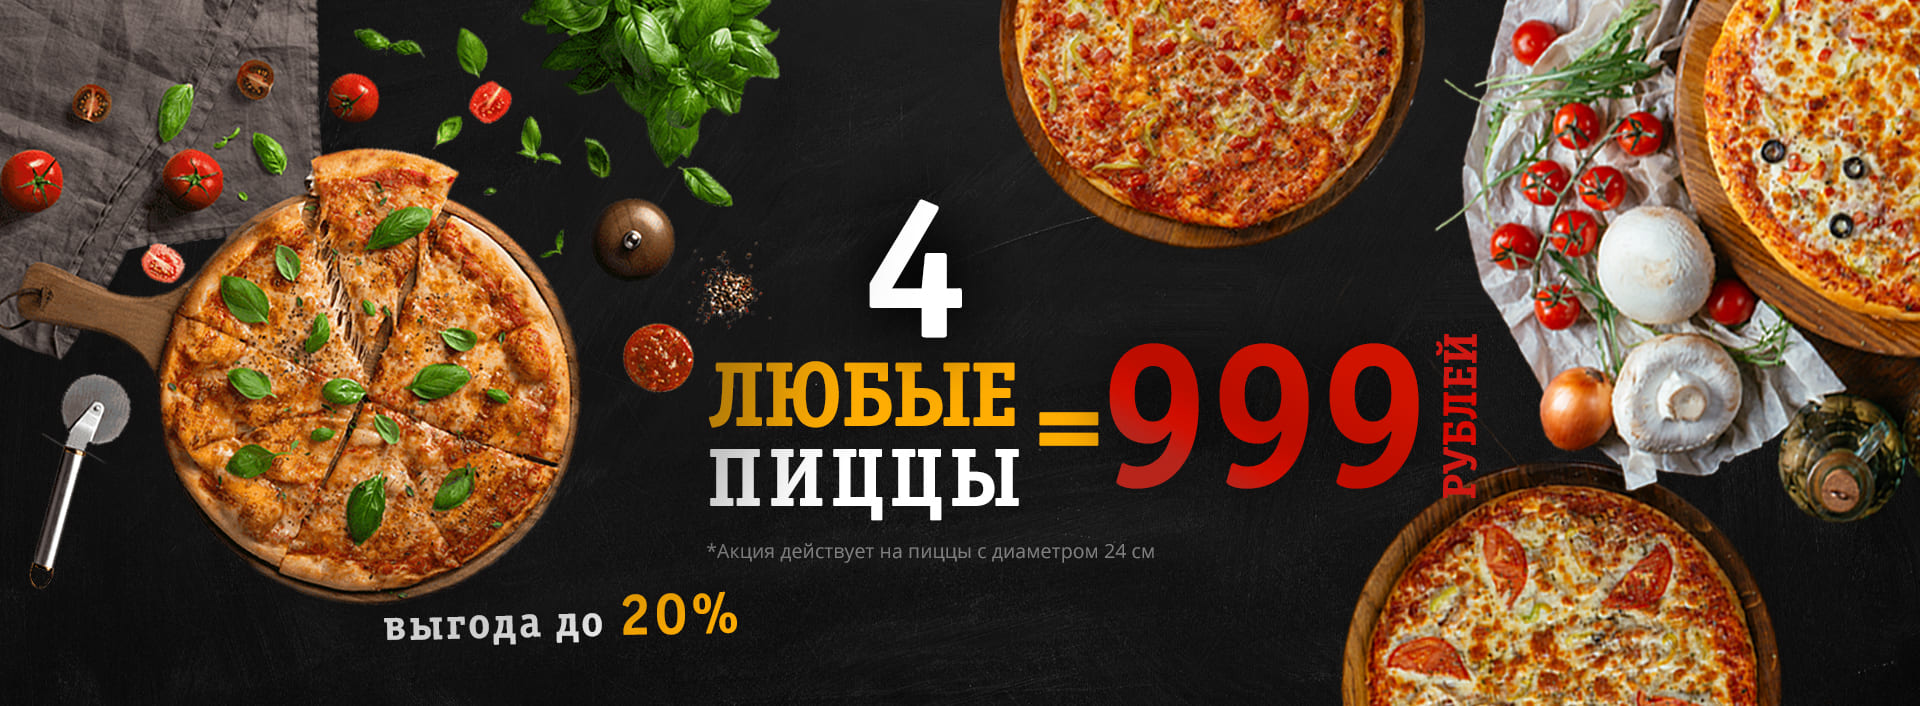 фото, акция купи 4 пиццы за 999 руб.